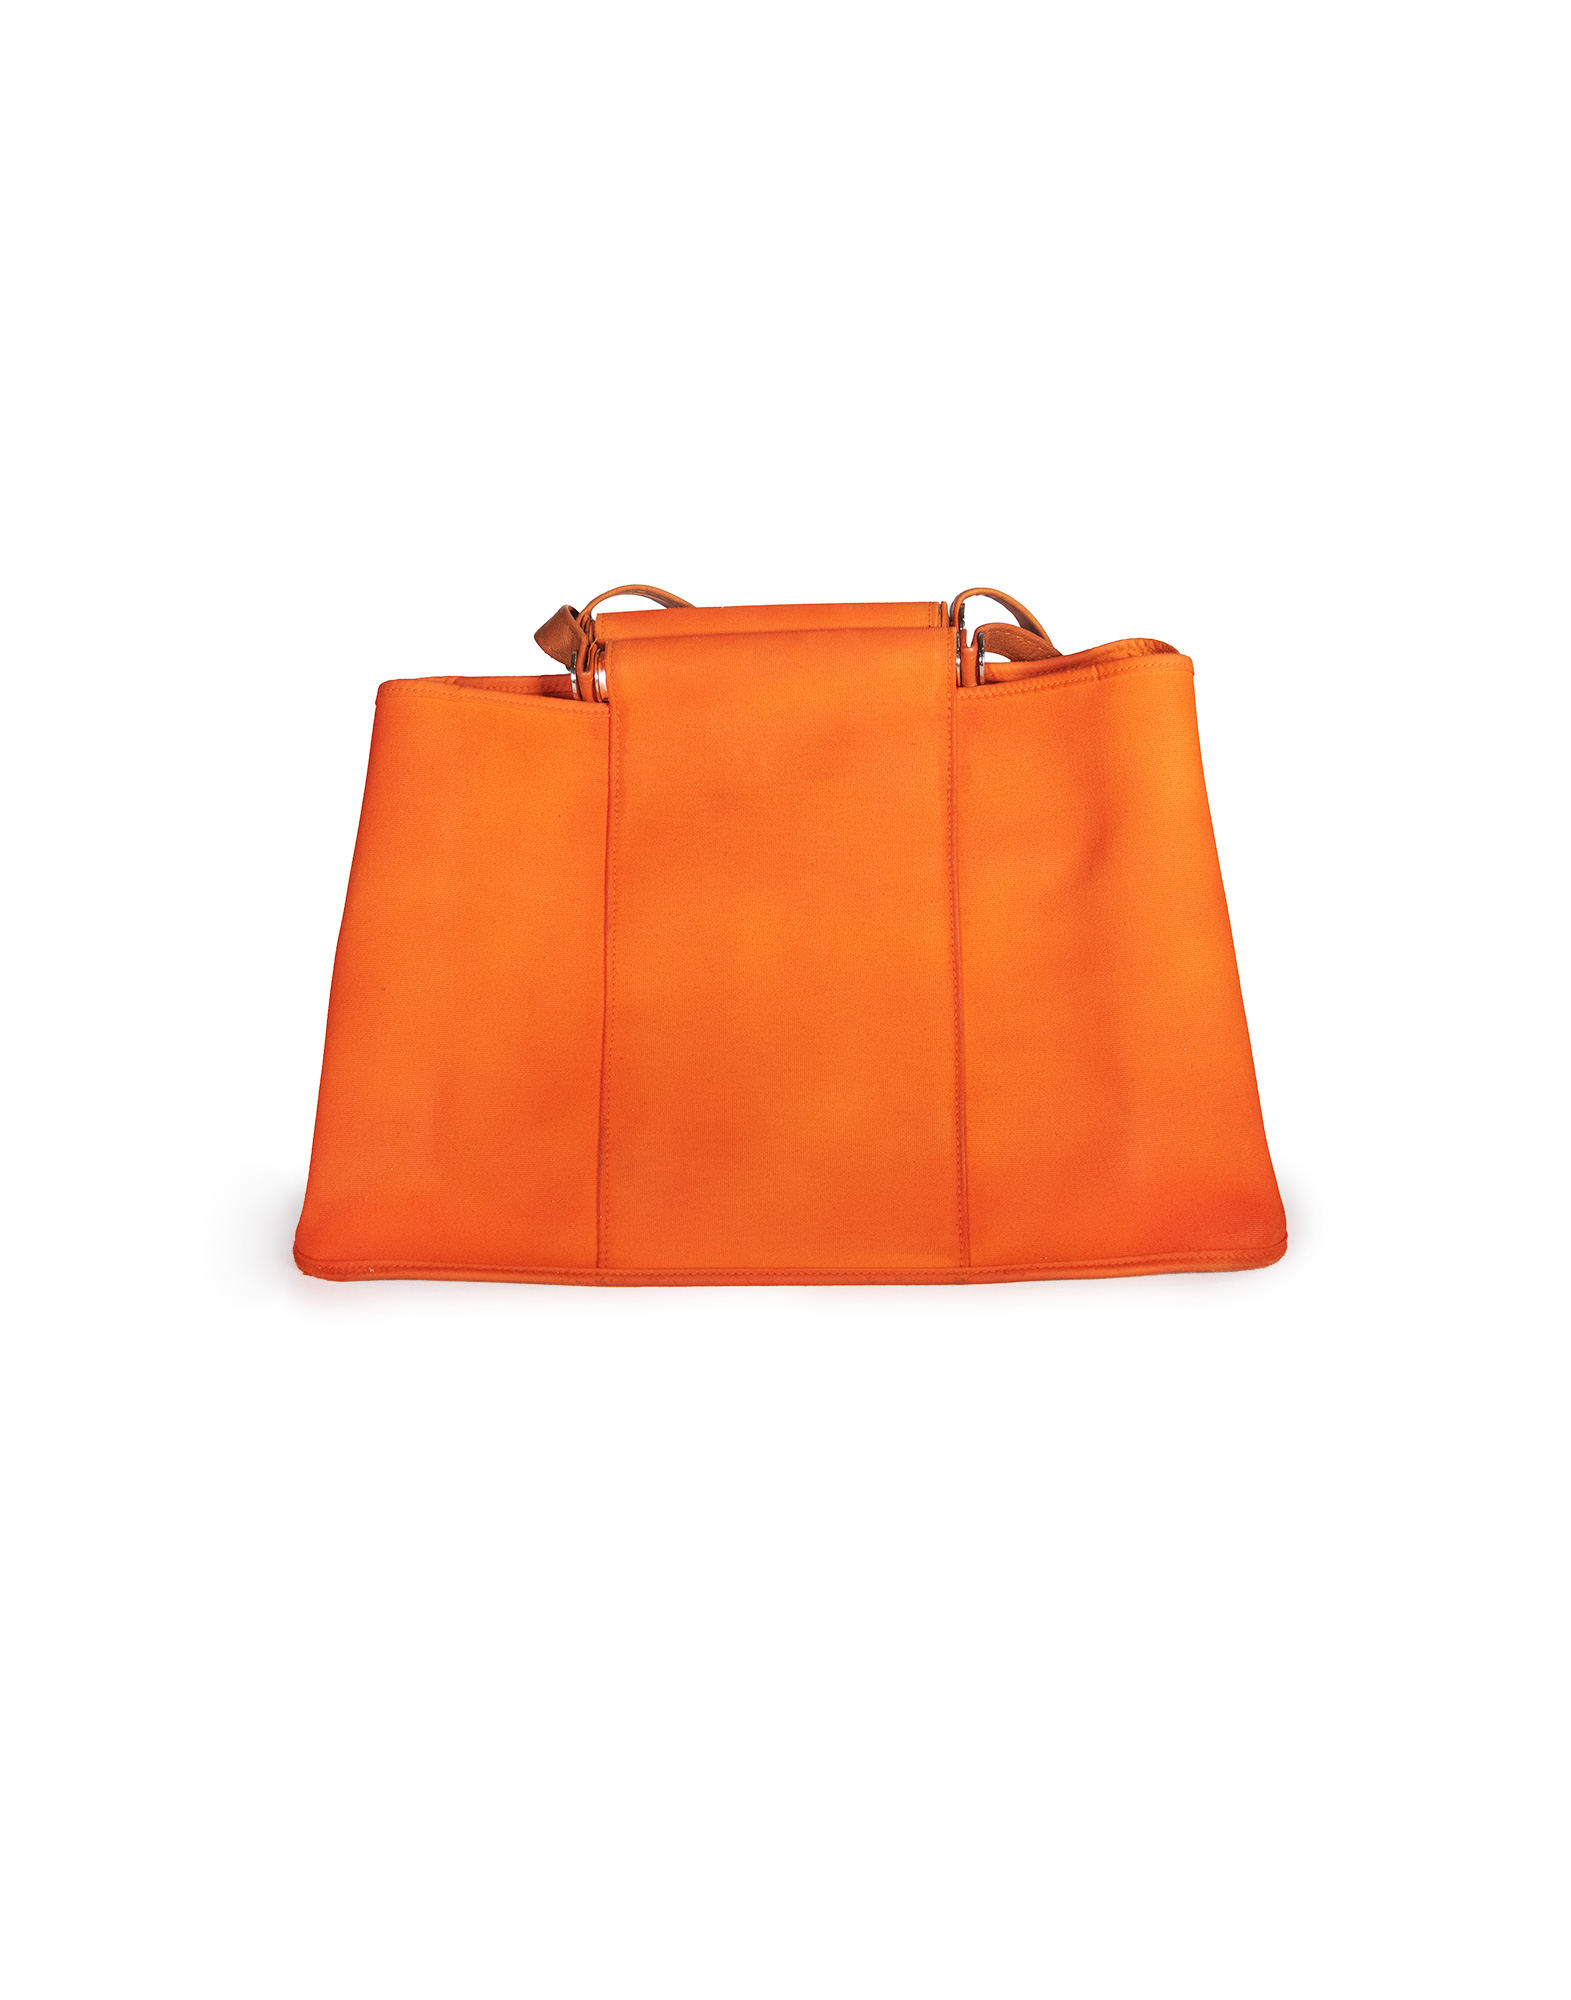 Hermes - Orange Cabag Tote shopping bag